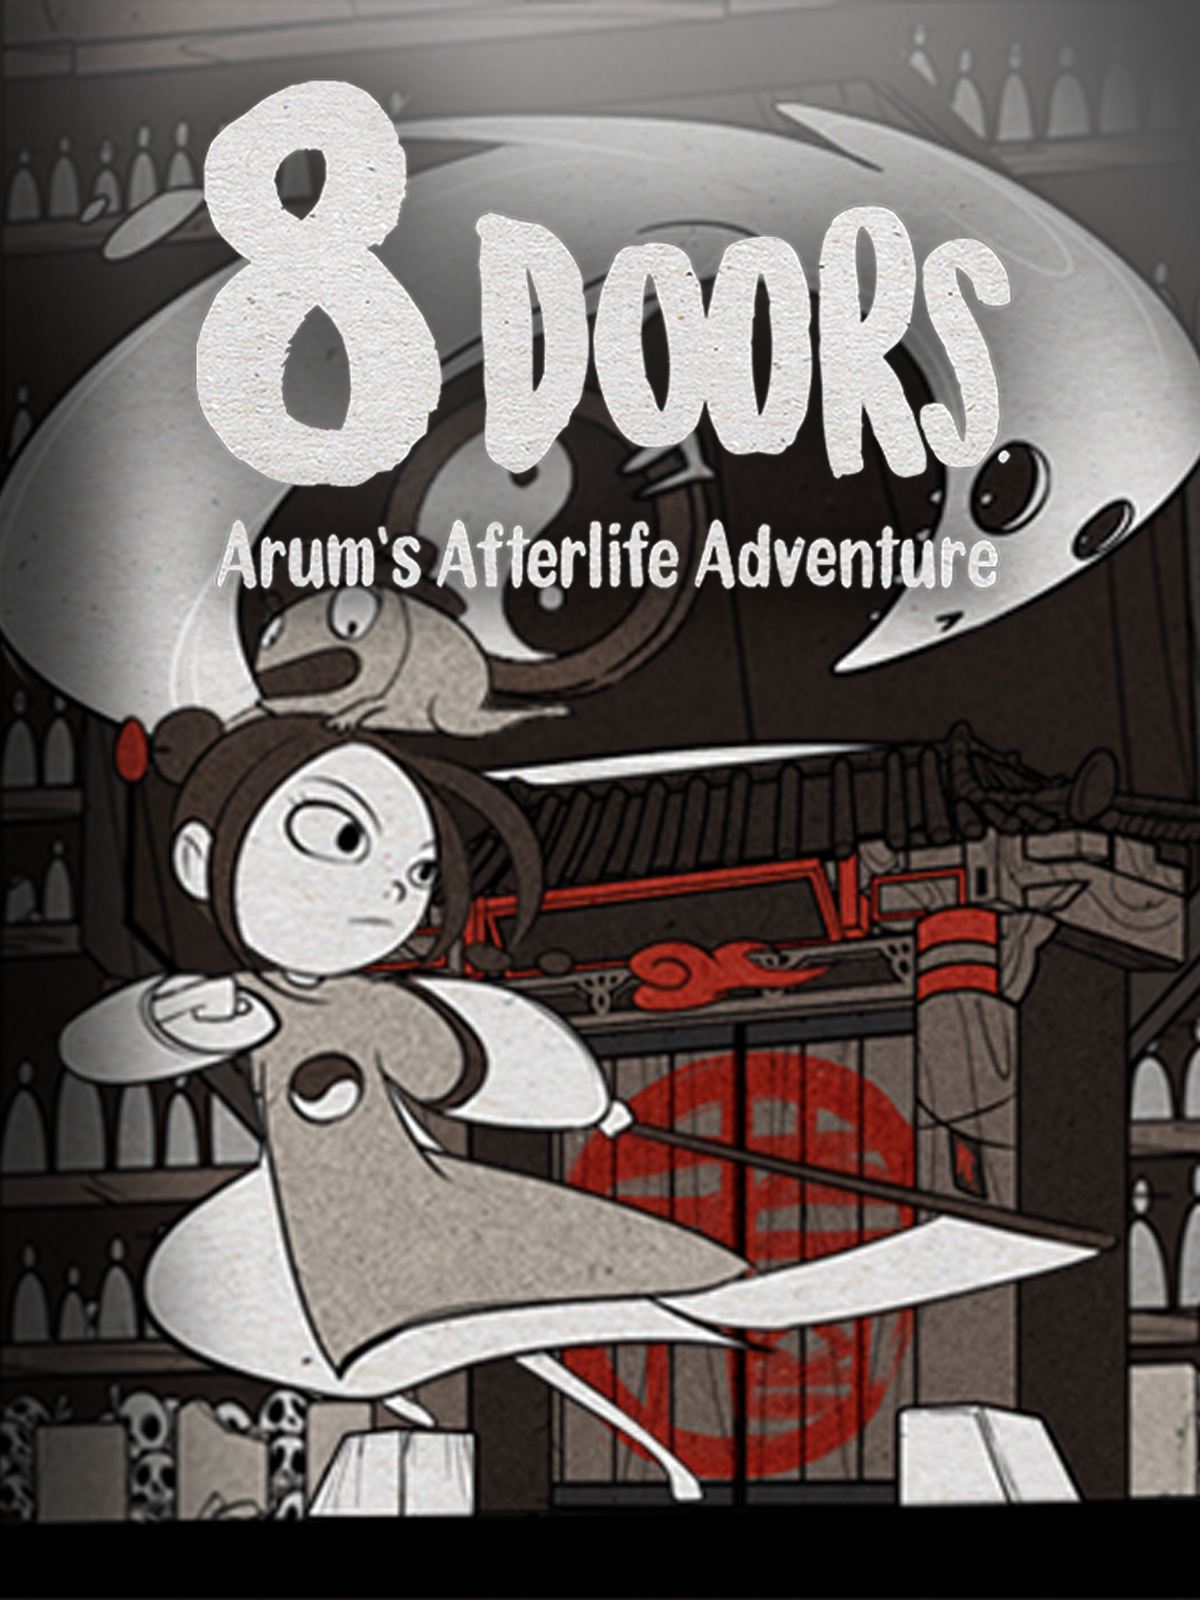 8Doors: Arum's Afterlife Adventure. Download and Buy Today Games Store